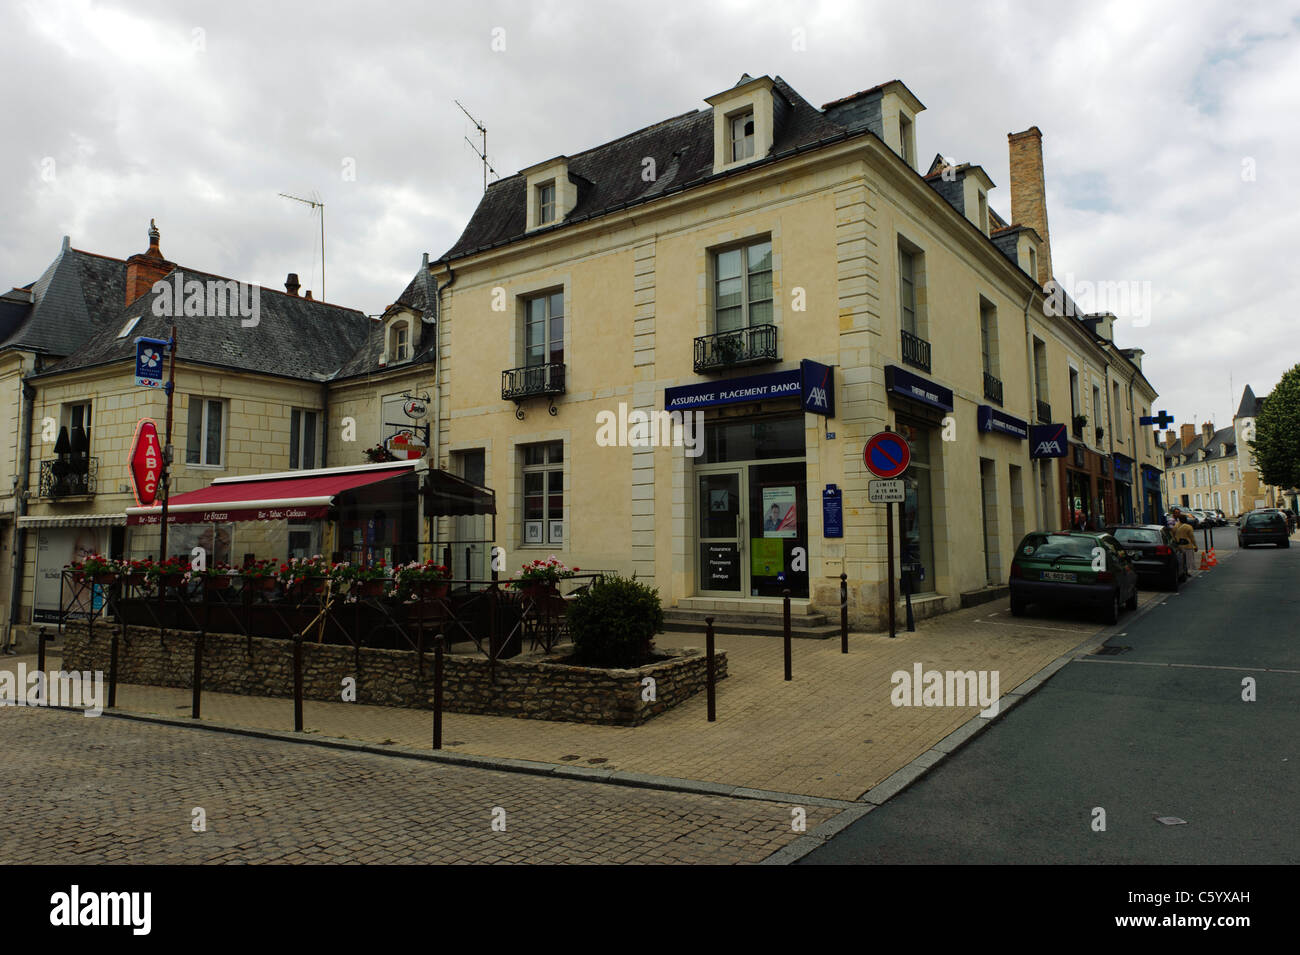 Bauge France, street scene Stock Photo